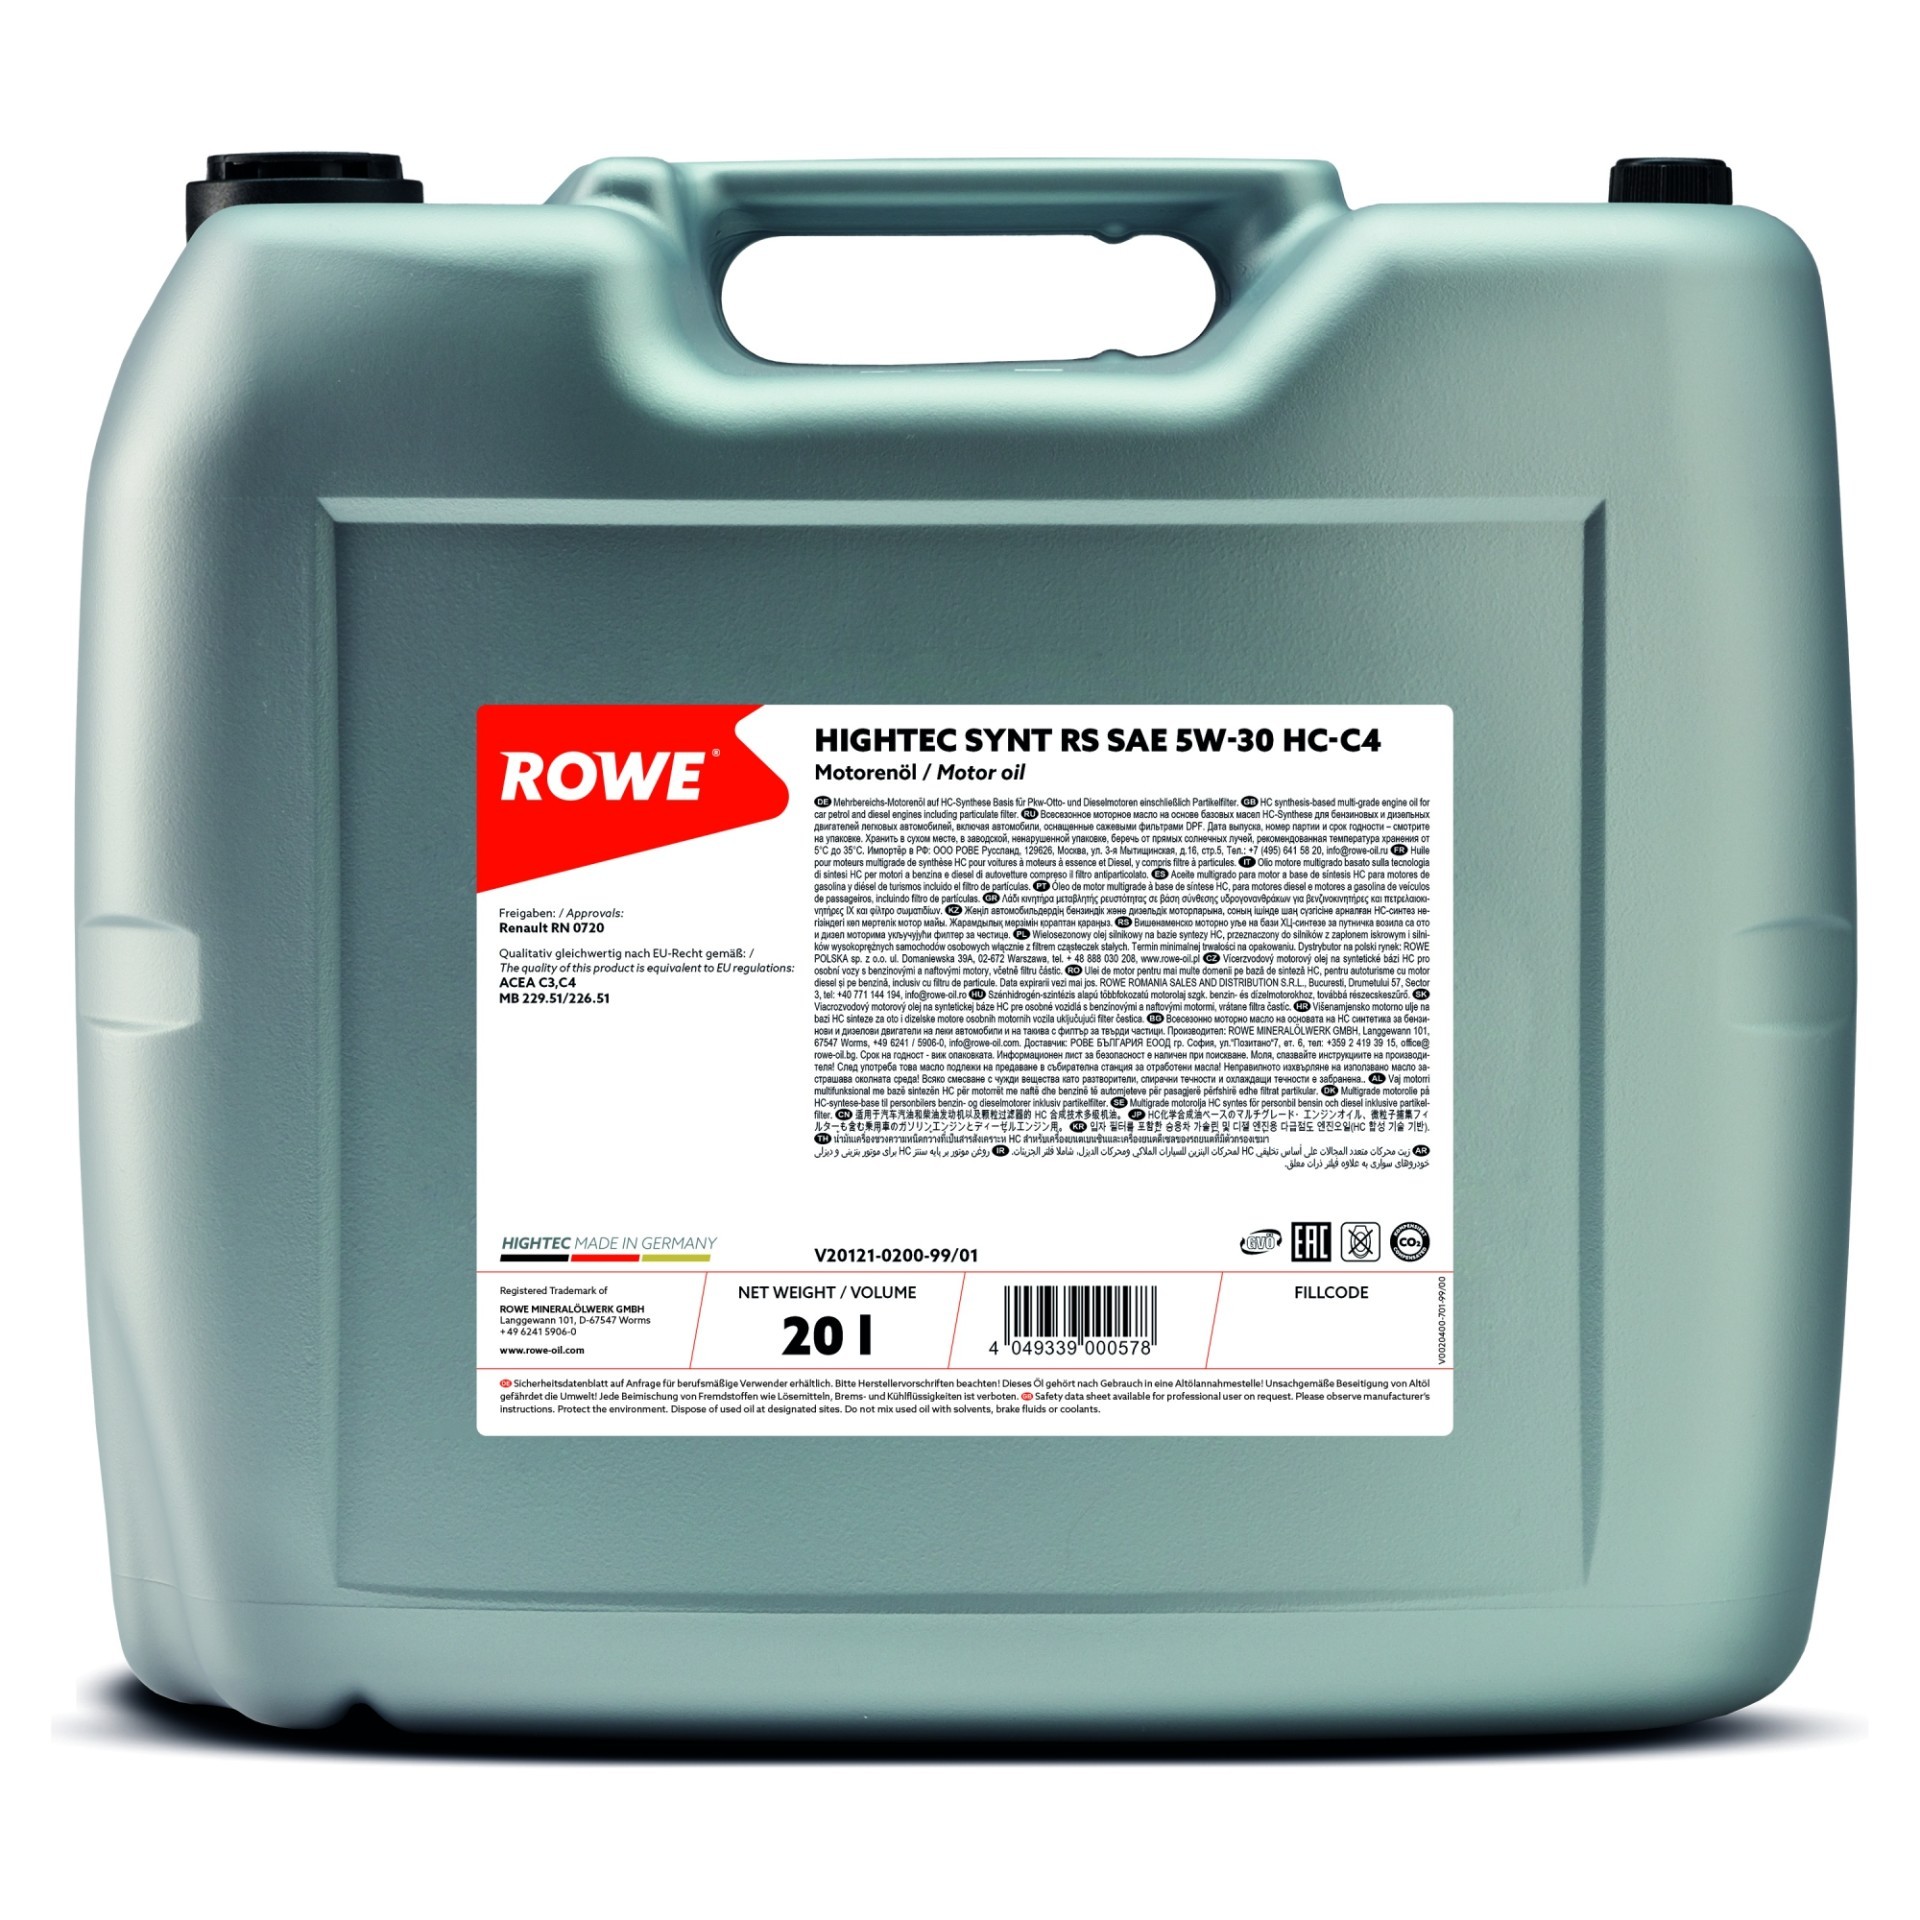 ROWE HIGHTEC SYNT RS SAE 5W-30 HC-C4 (20121) Teilsynthetiköl 20 L